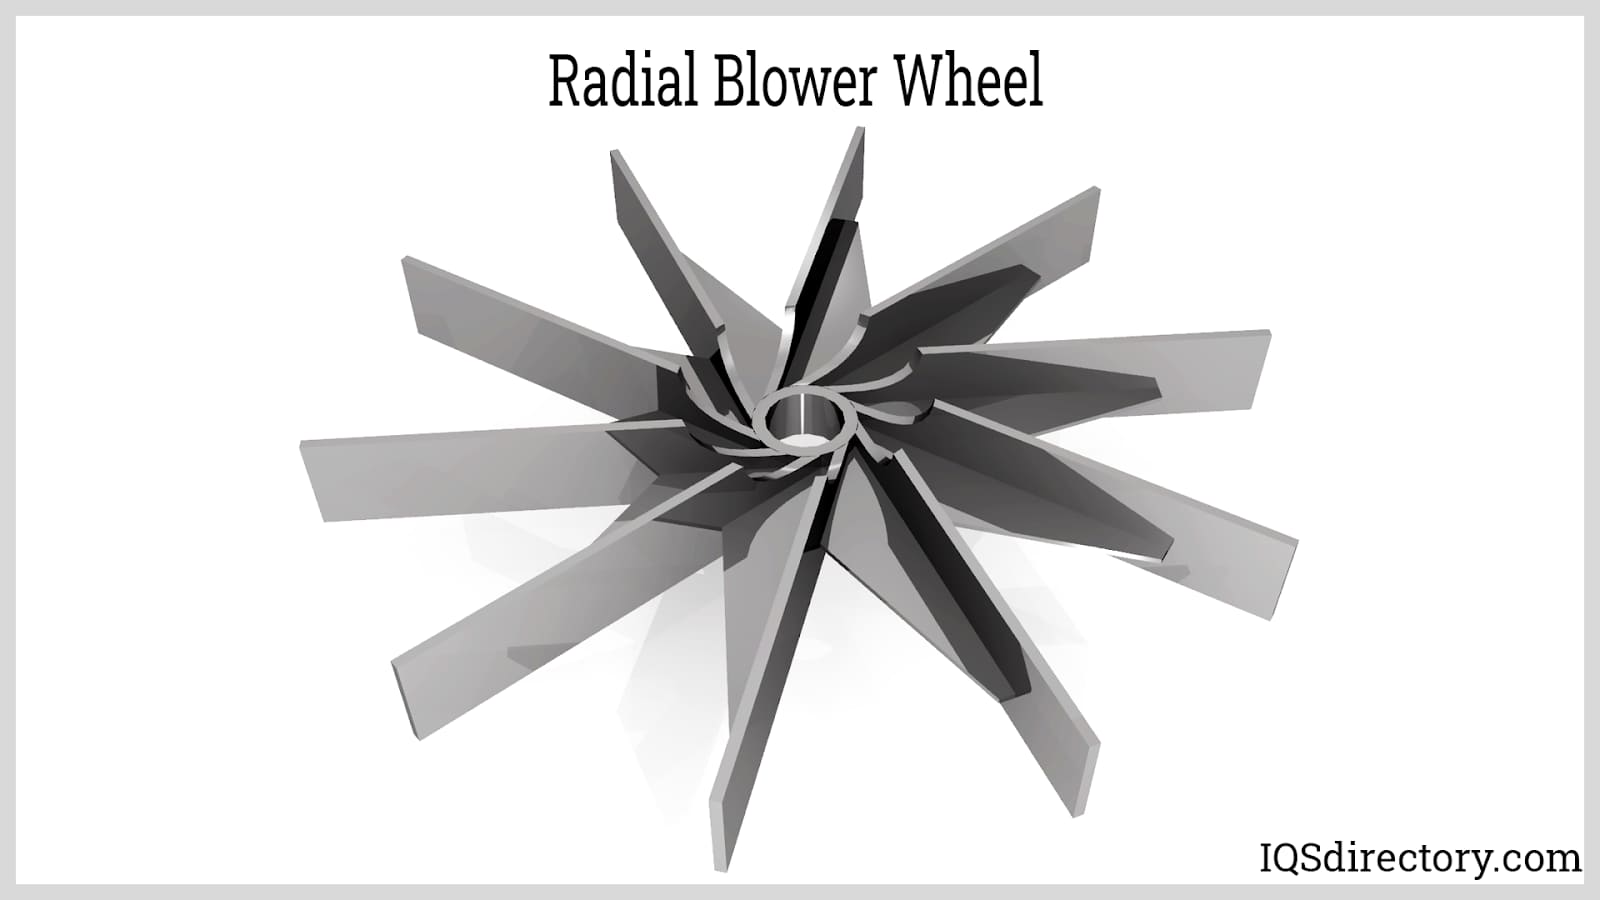 Radial Blower wheel